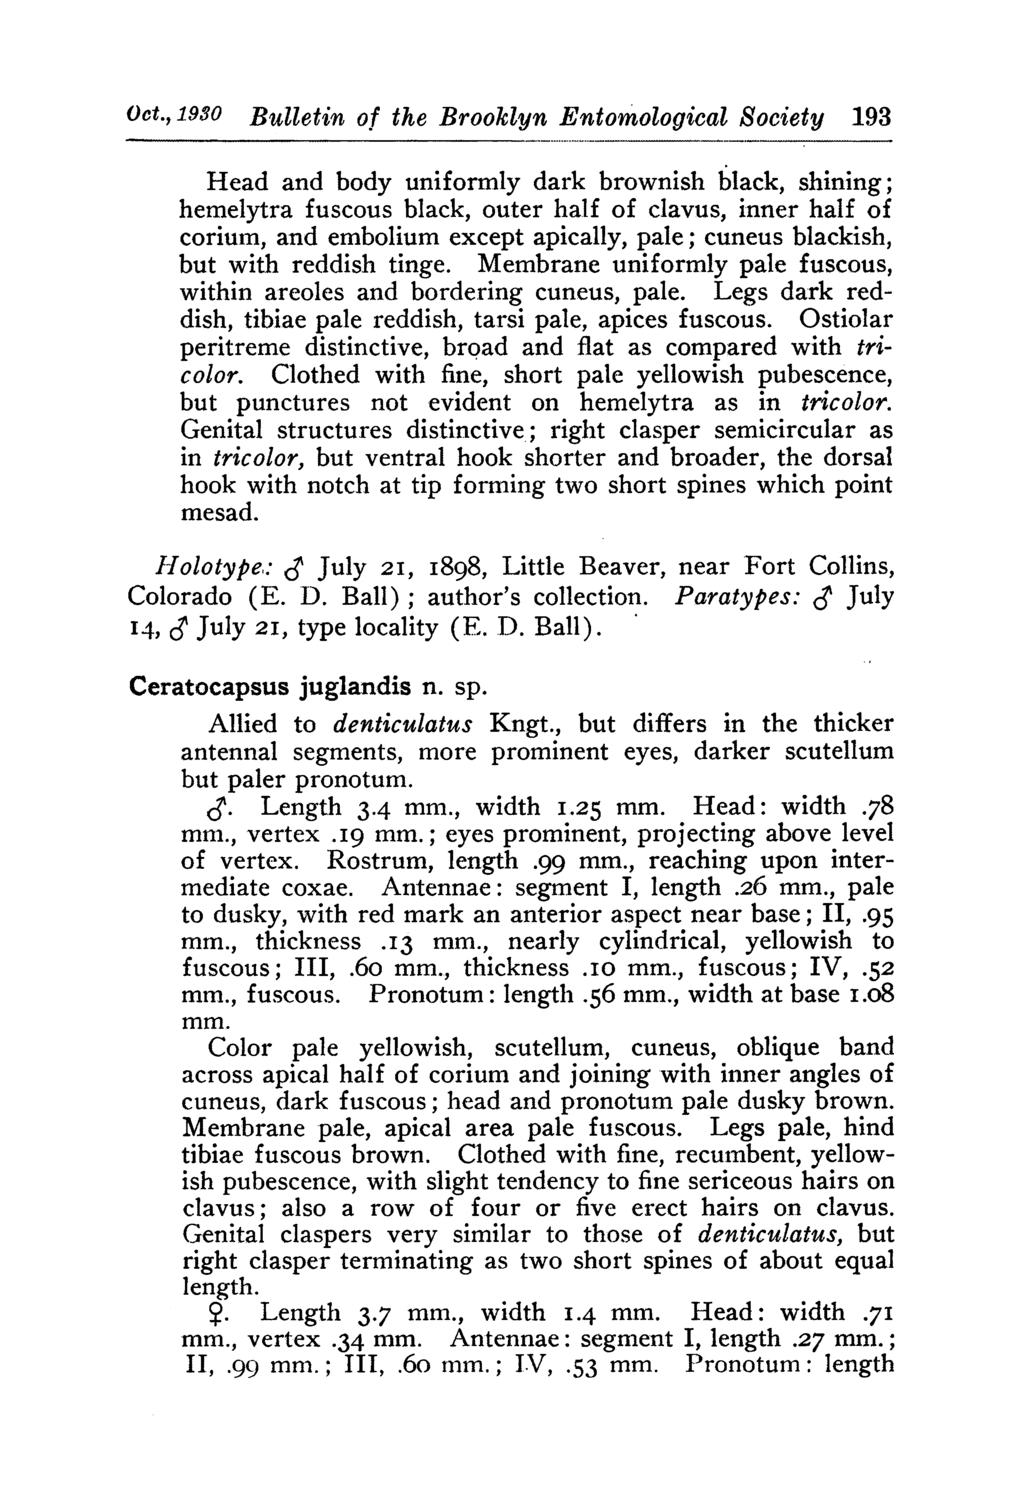 Oct., 1930 Bulletin of the Brooklyn Entomological Society 193 Head and body uniformly dark brownish black, shining; hemelytra fuscous black, outer half of clavus, inner half of corium, and embolium